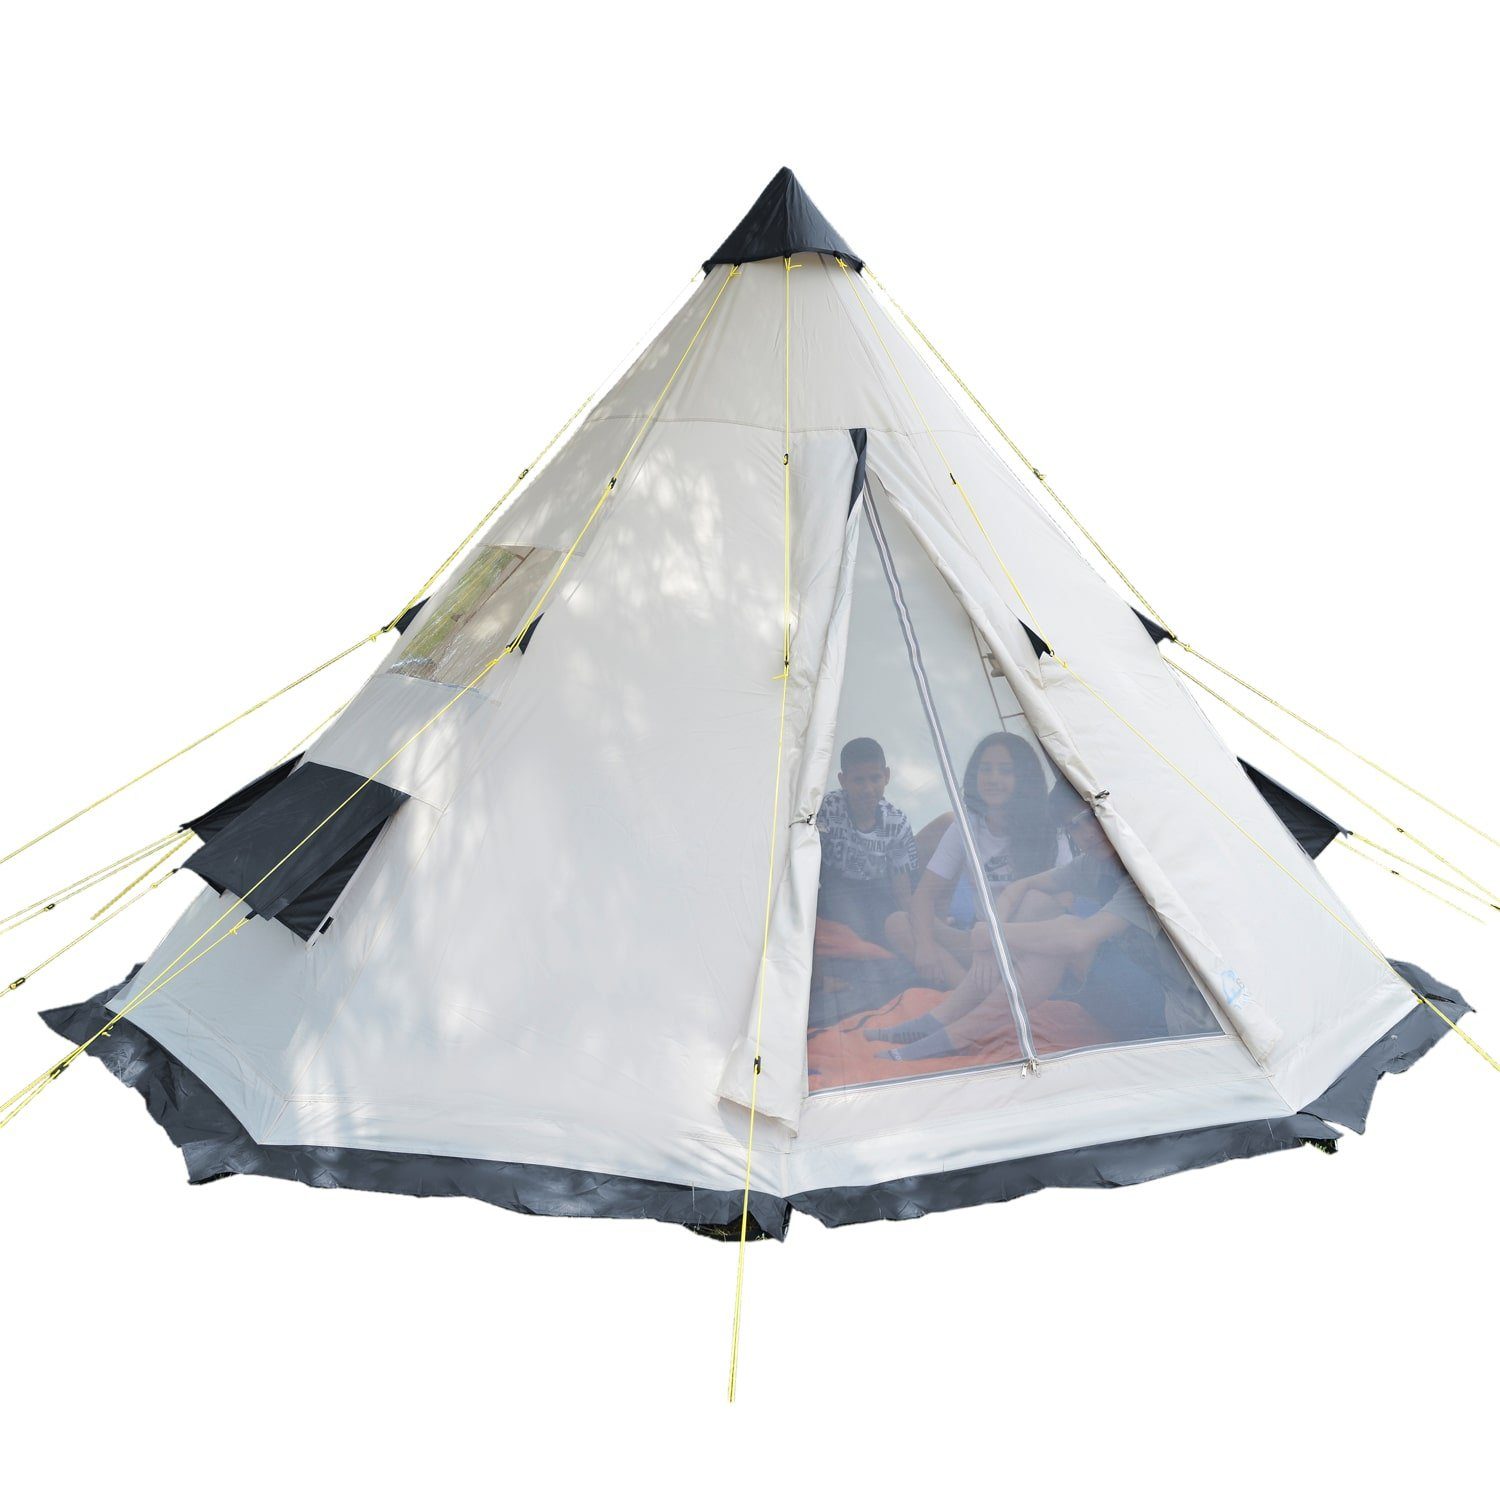 Skandika Tipi-Zelt 10 Protect (beige/d'grau), Campingzelt, wasserfest, eingenähter Zeltboden